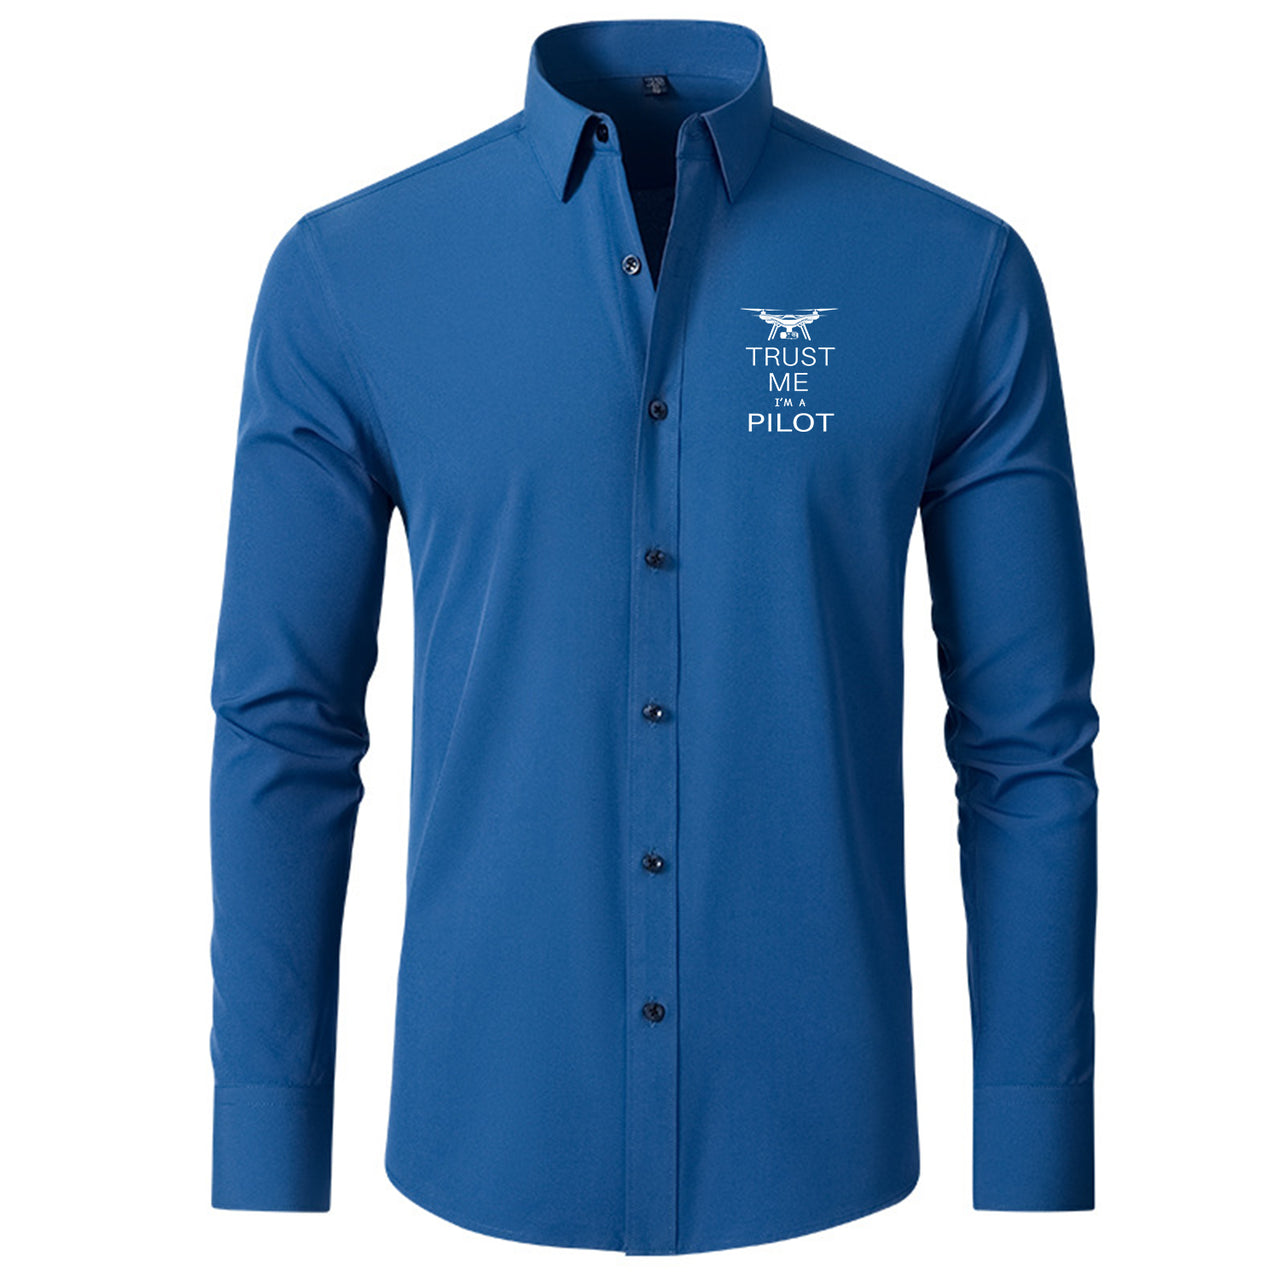 Trust Me I'm a Pilot (Drone) Designed Long Sleeve Shirts